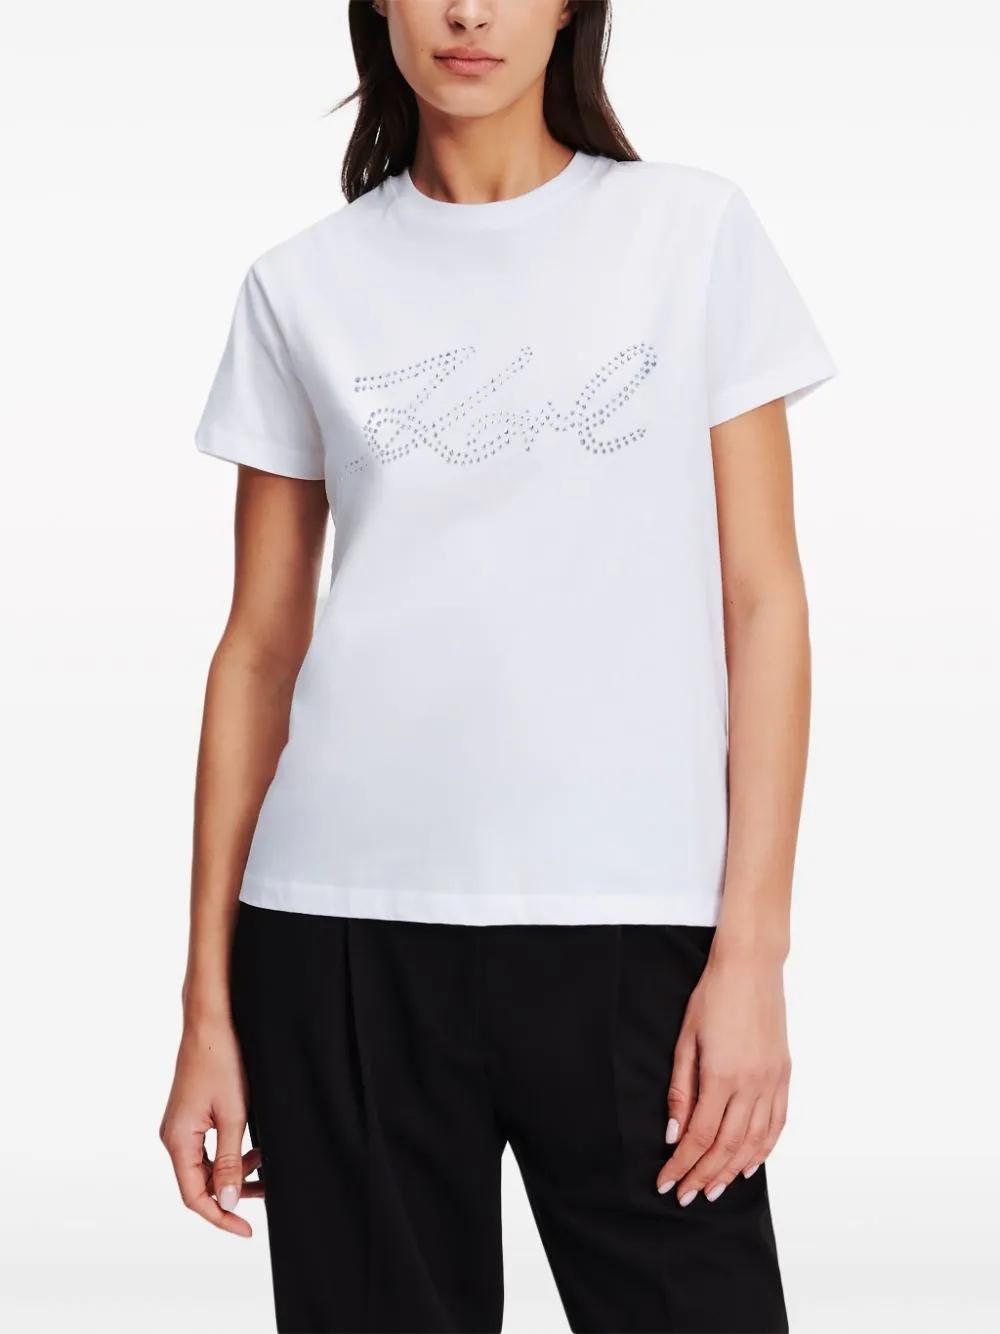 Camiseta Karl Lagerfeld Rhinestone Blanca